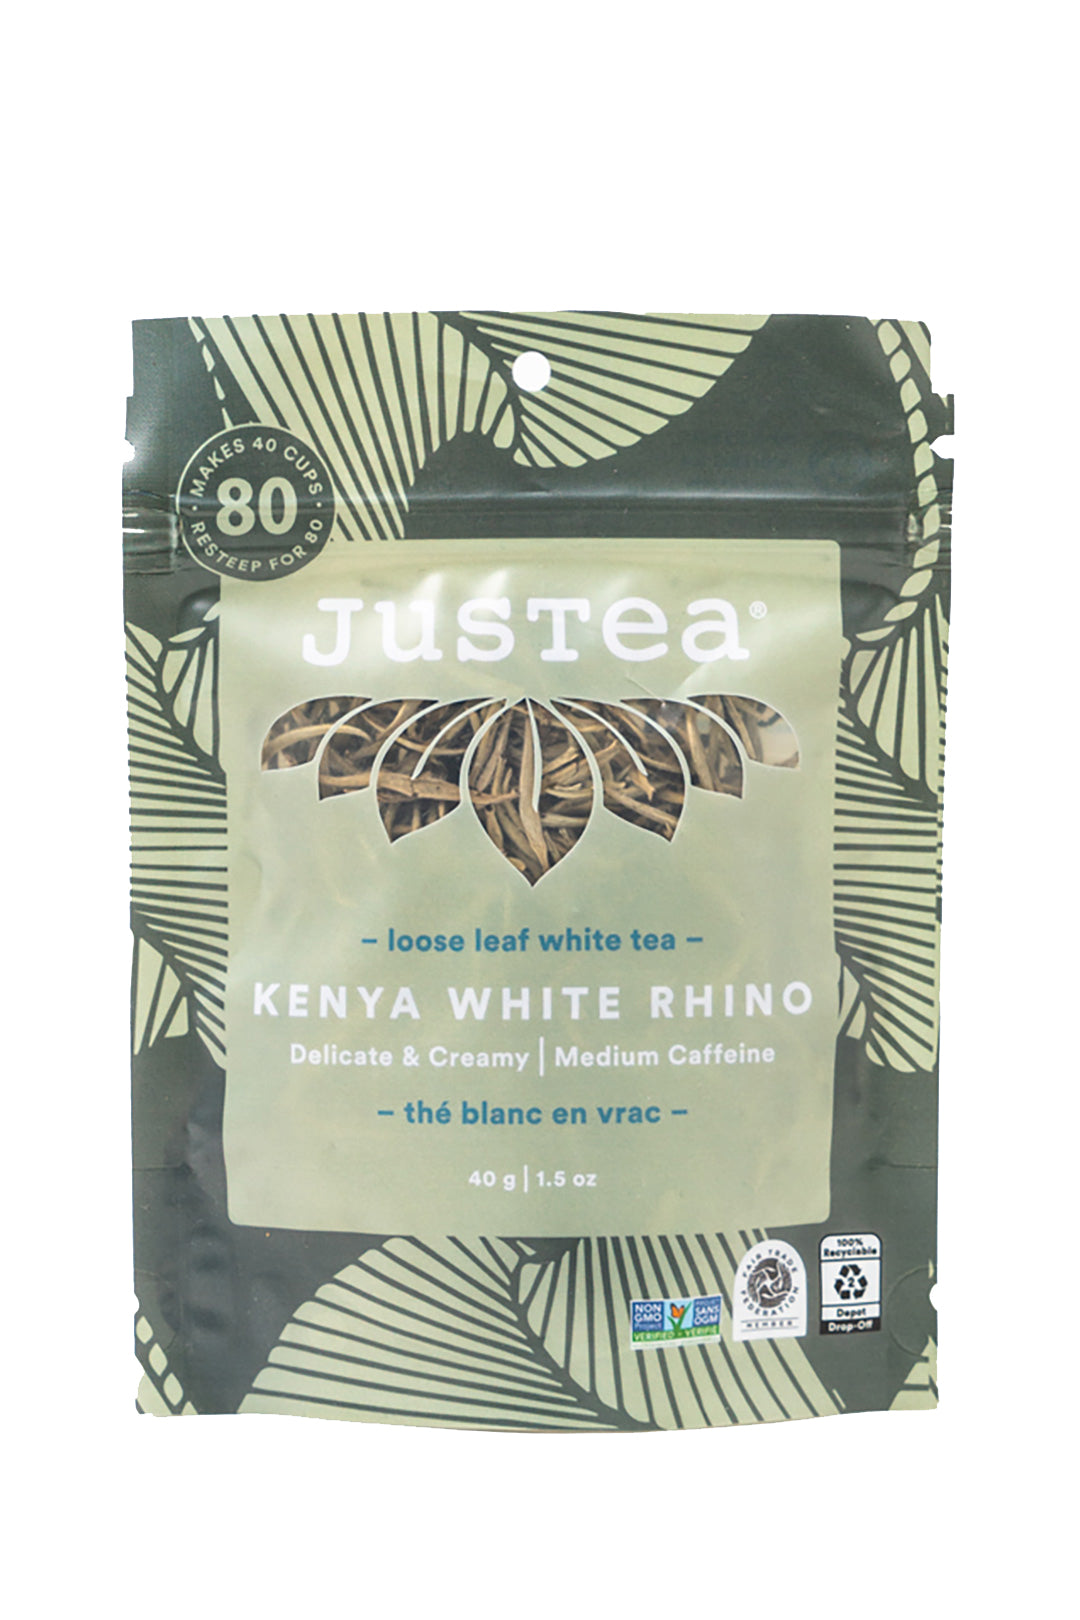 JusTea® Kenya White Rhino Loose Leaf Tea Pouch